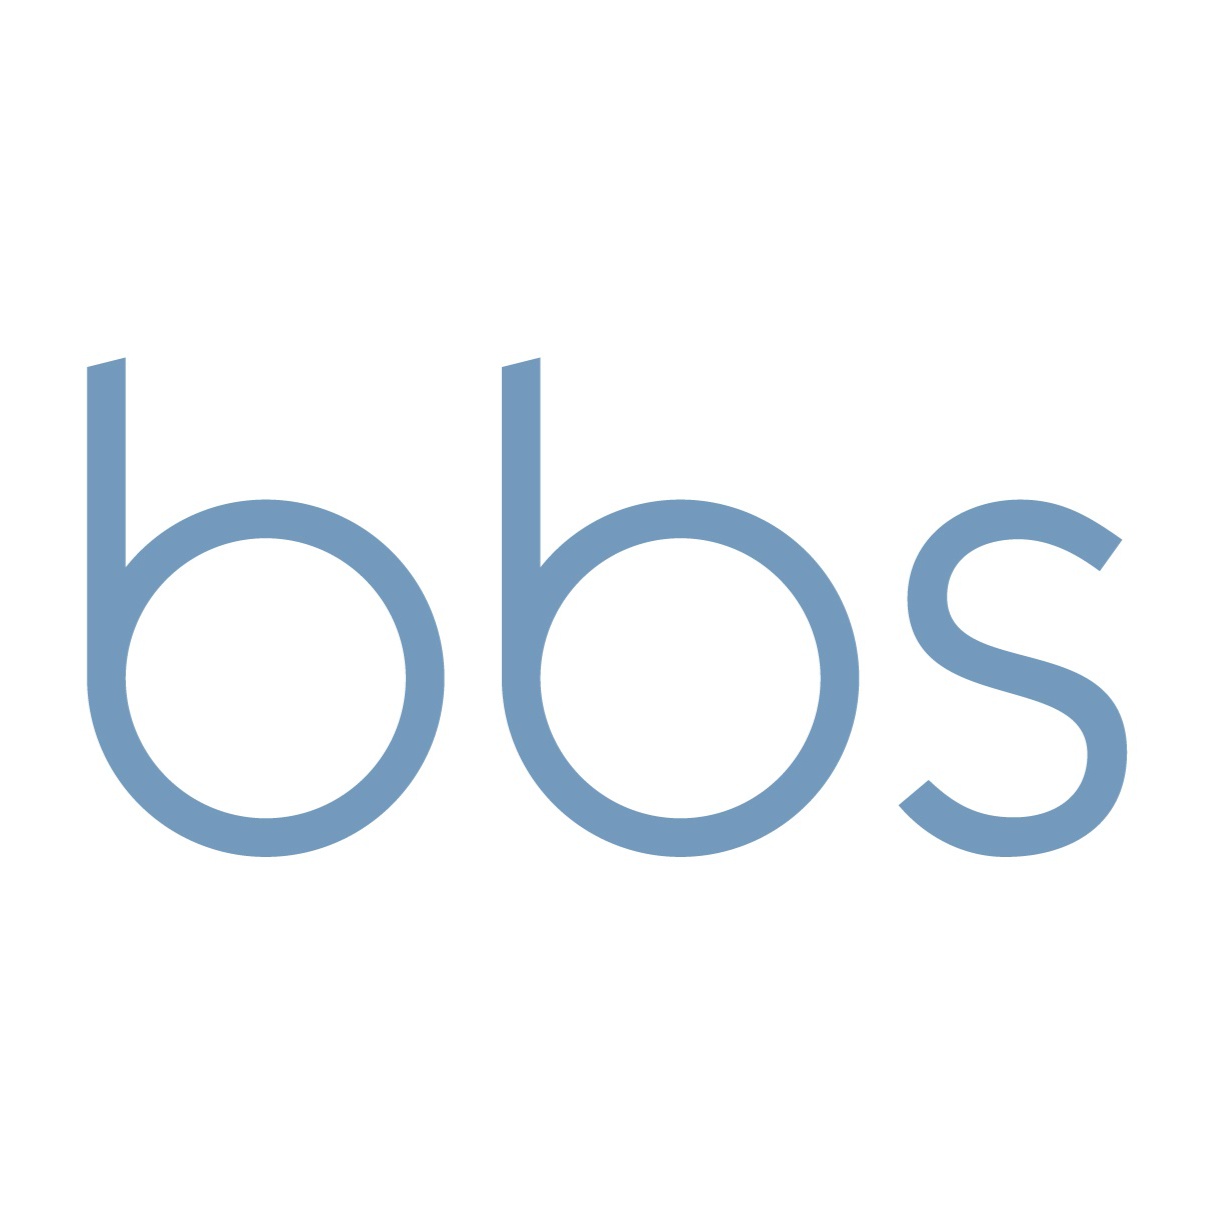 Bbs Lawyers - Adelaide, SA 5000 - (08) 8110 2300 | ShowMeLocal.com